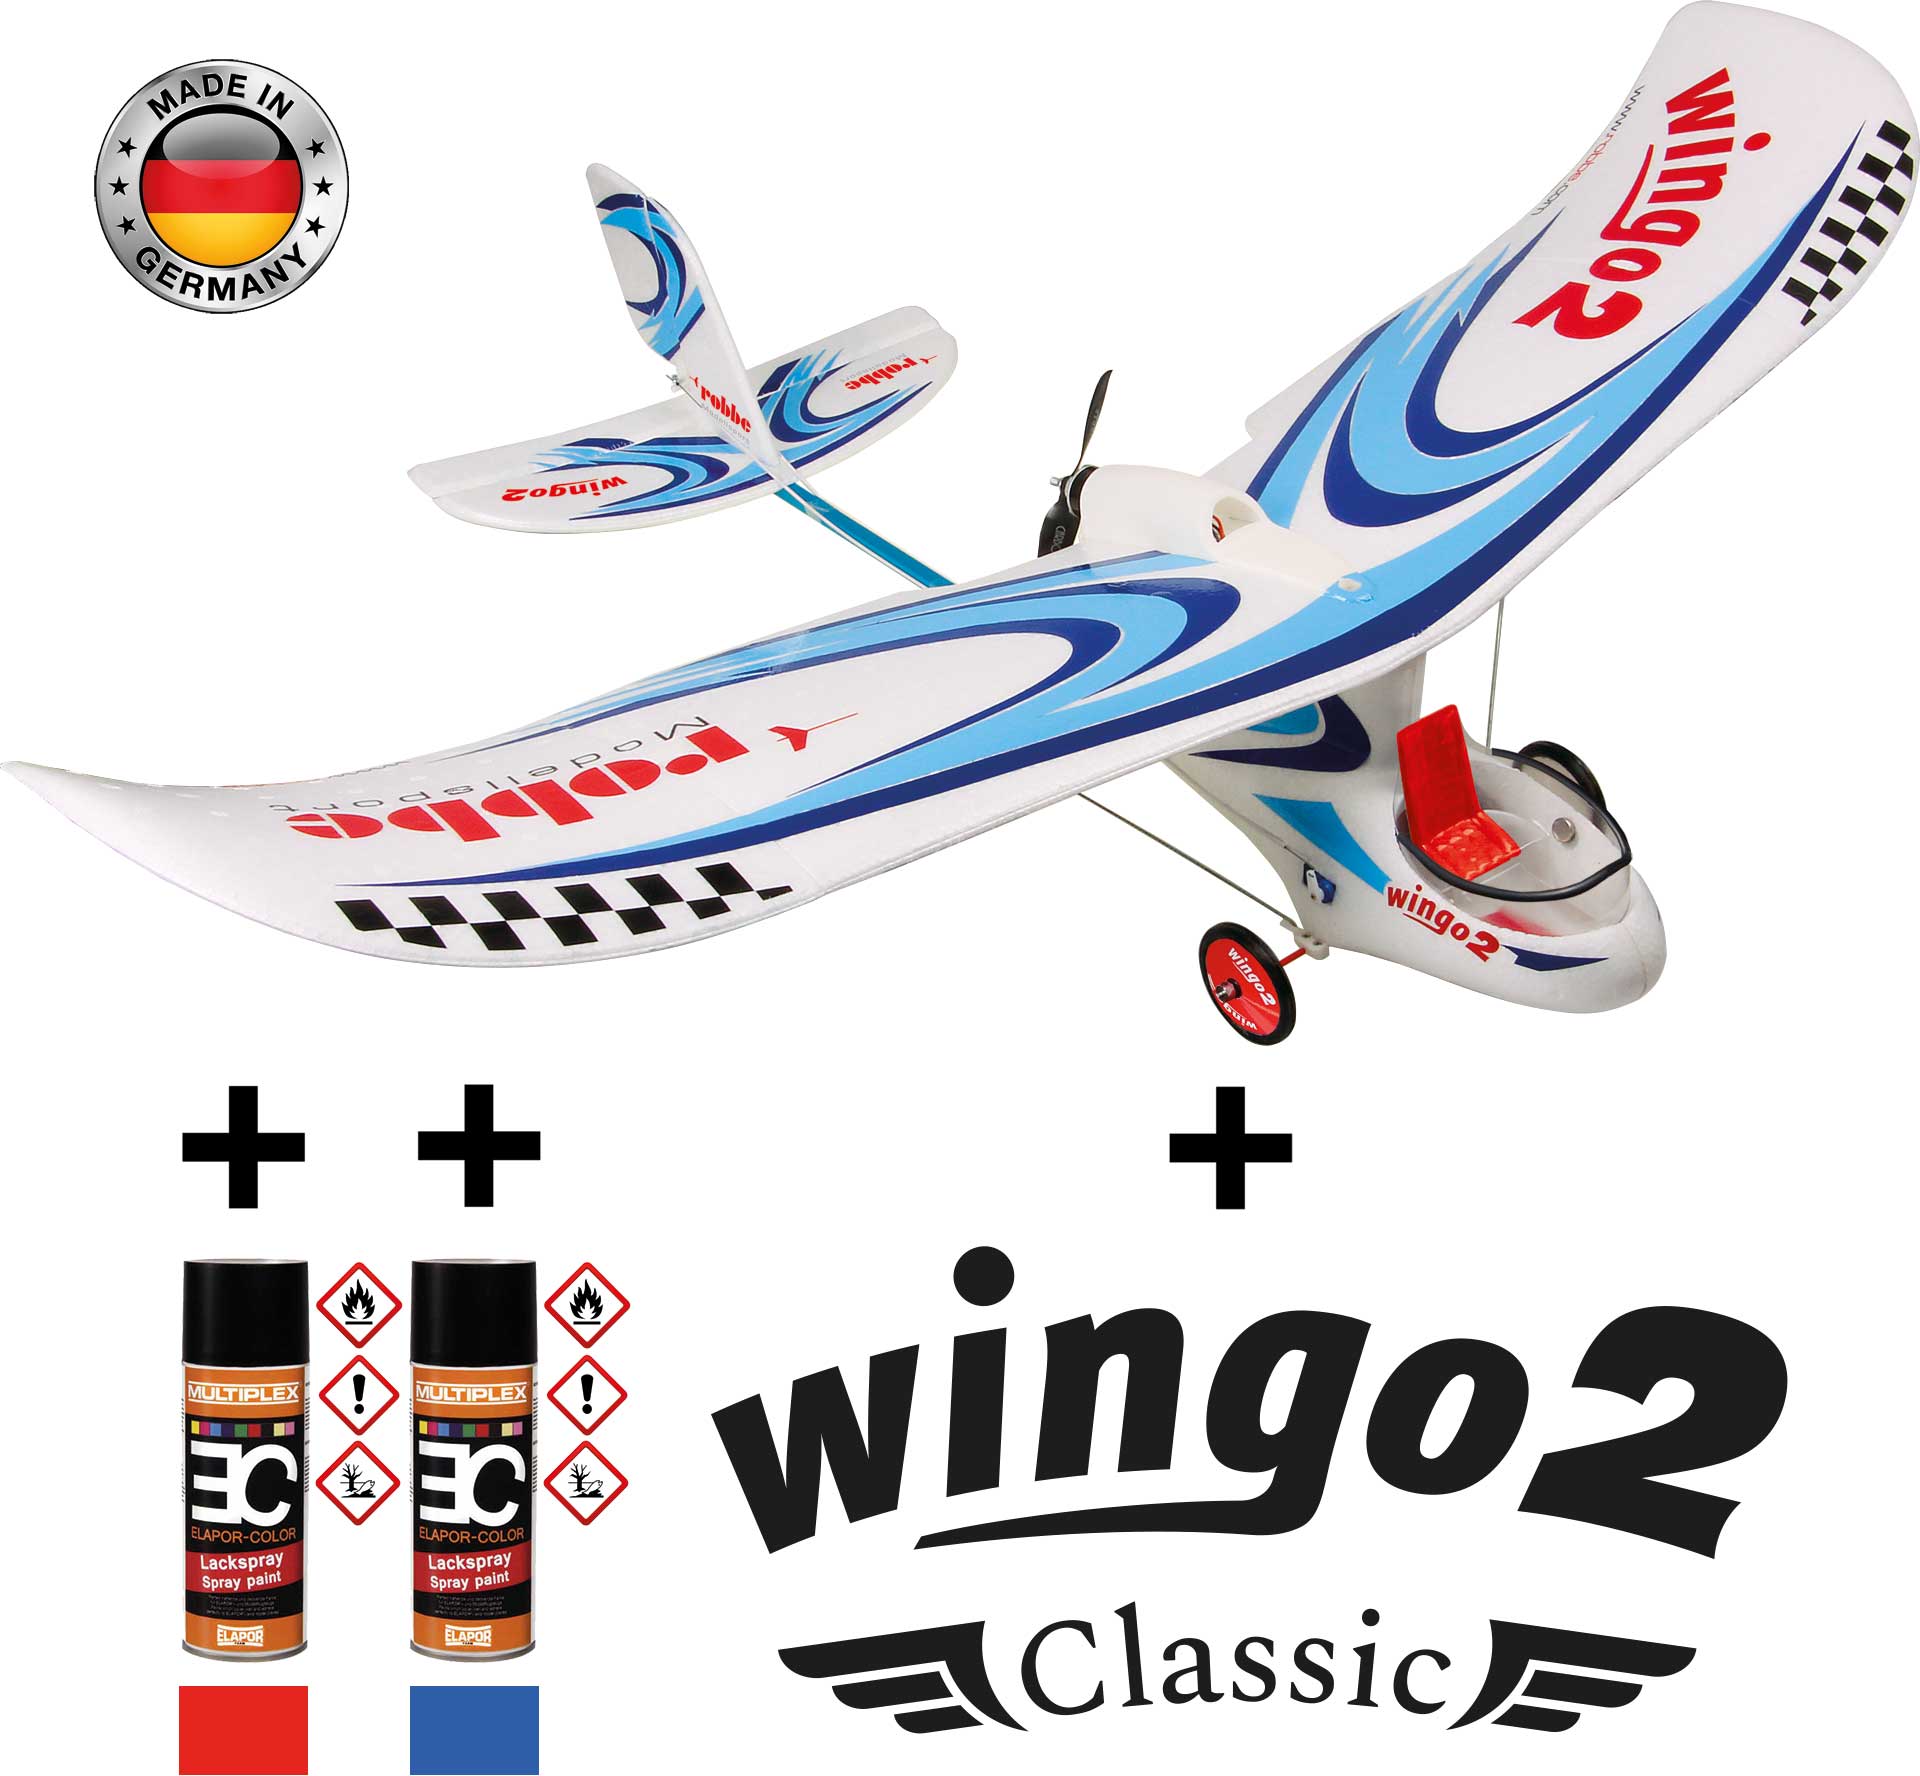 Robbe Modellsport Wingo 2 Kit "Classic" Sonderversion mit "Classic" Dekorsatz und Farbspray rot/blau